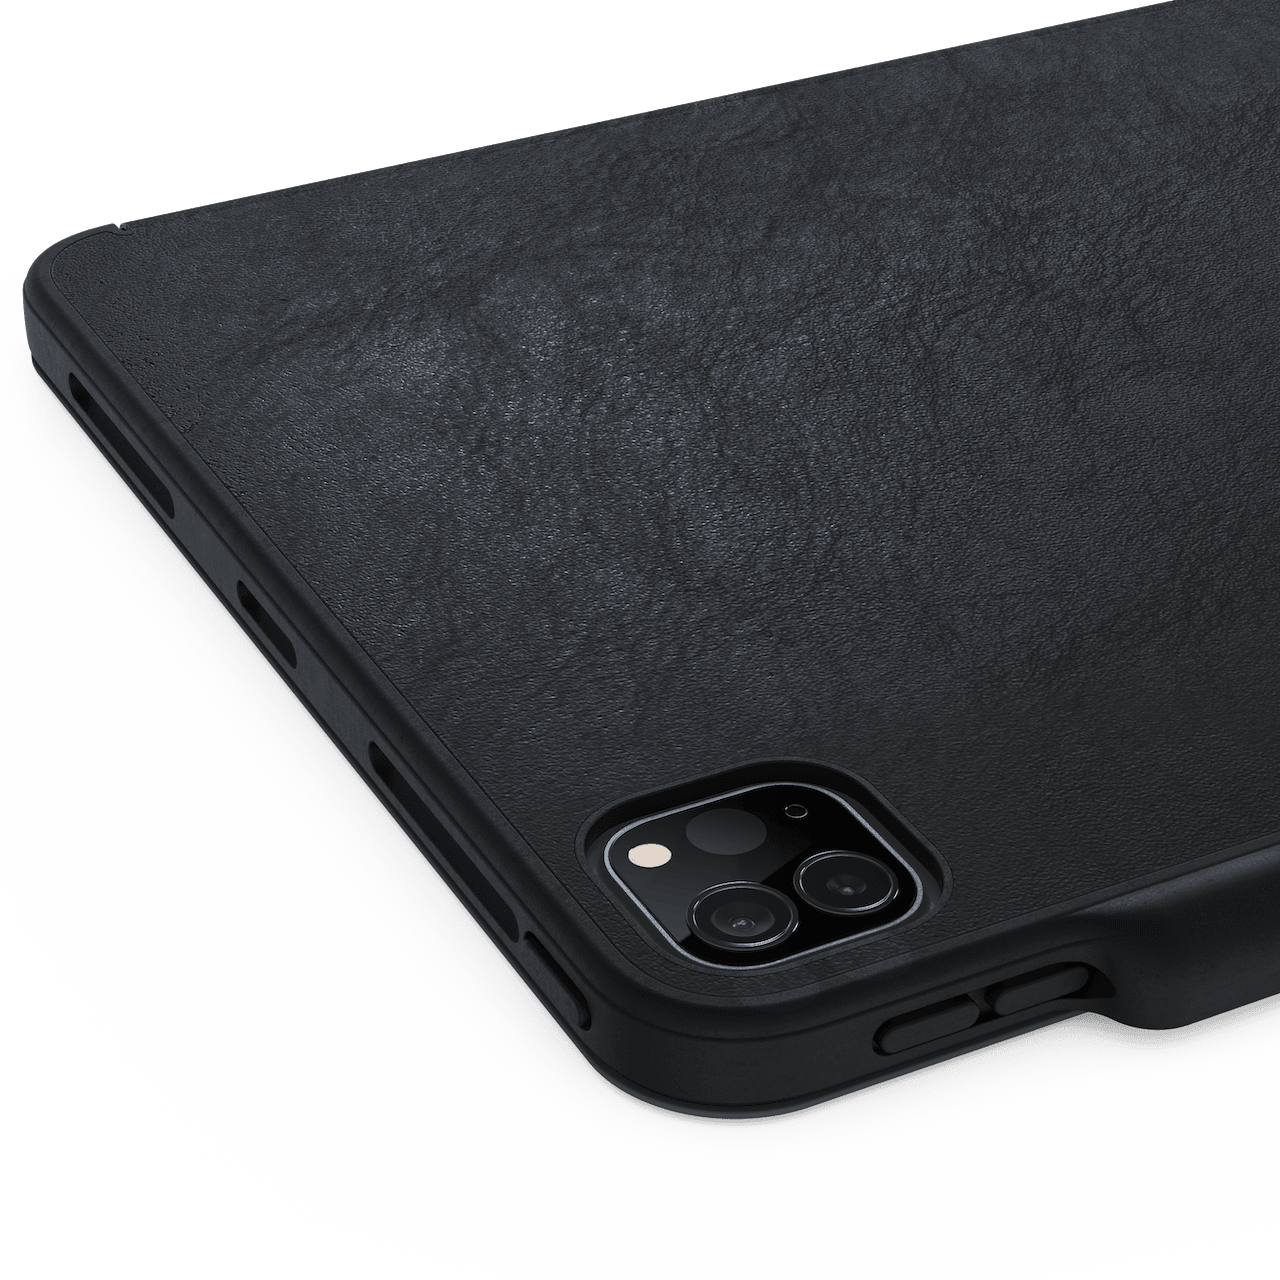 MoArmouz - Folio Smart Cover for iPad Pro 11-inch M1, 3rd Gen 2021